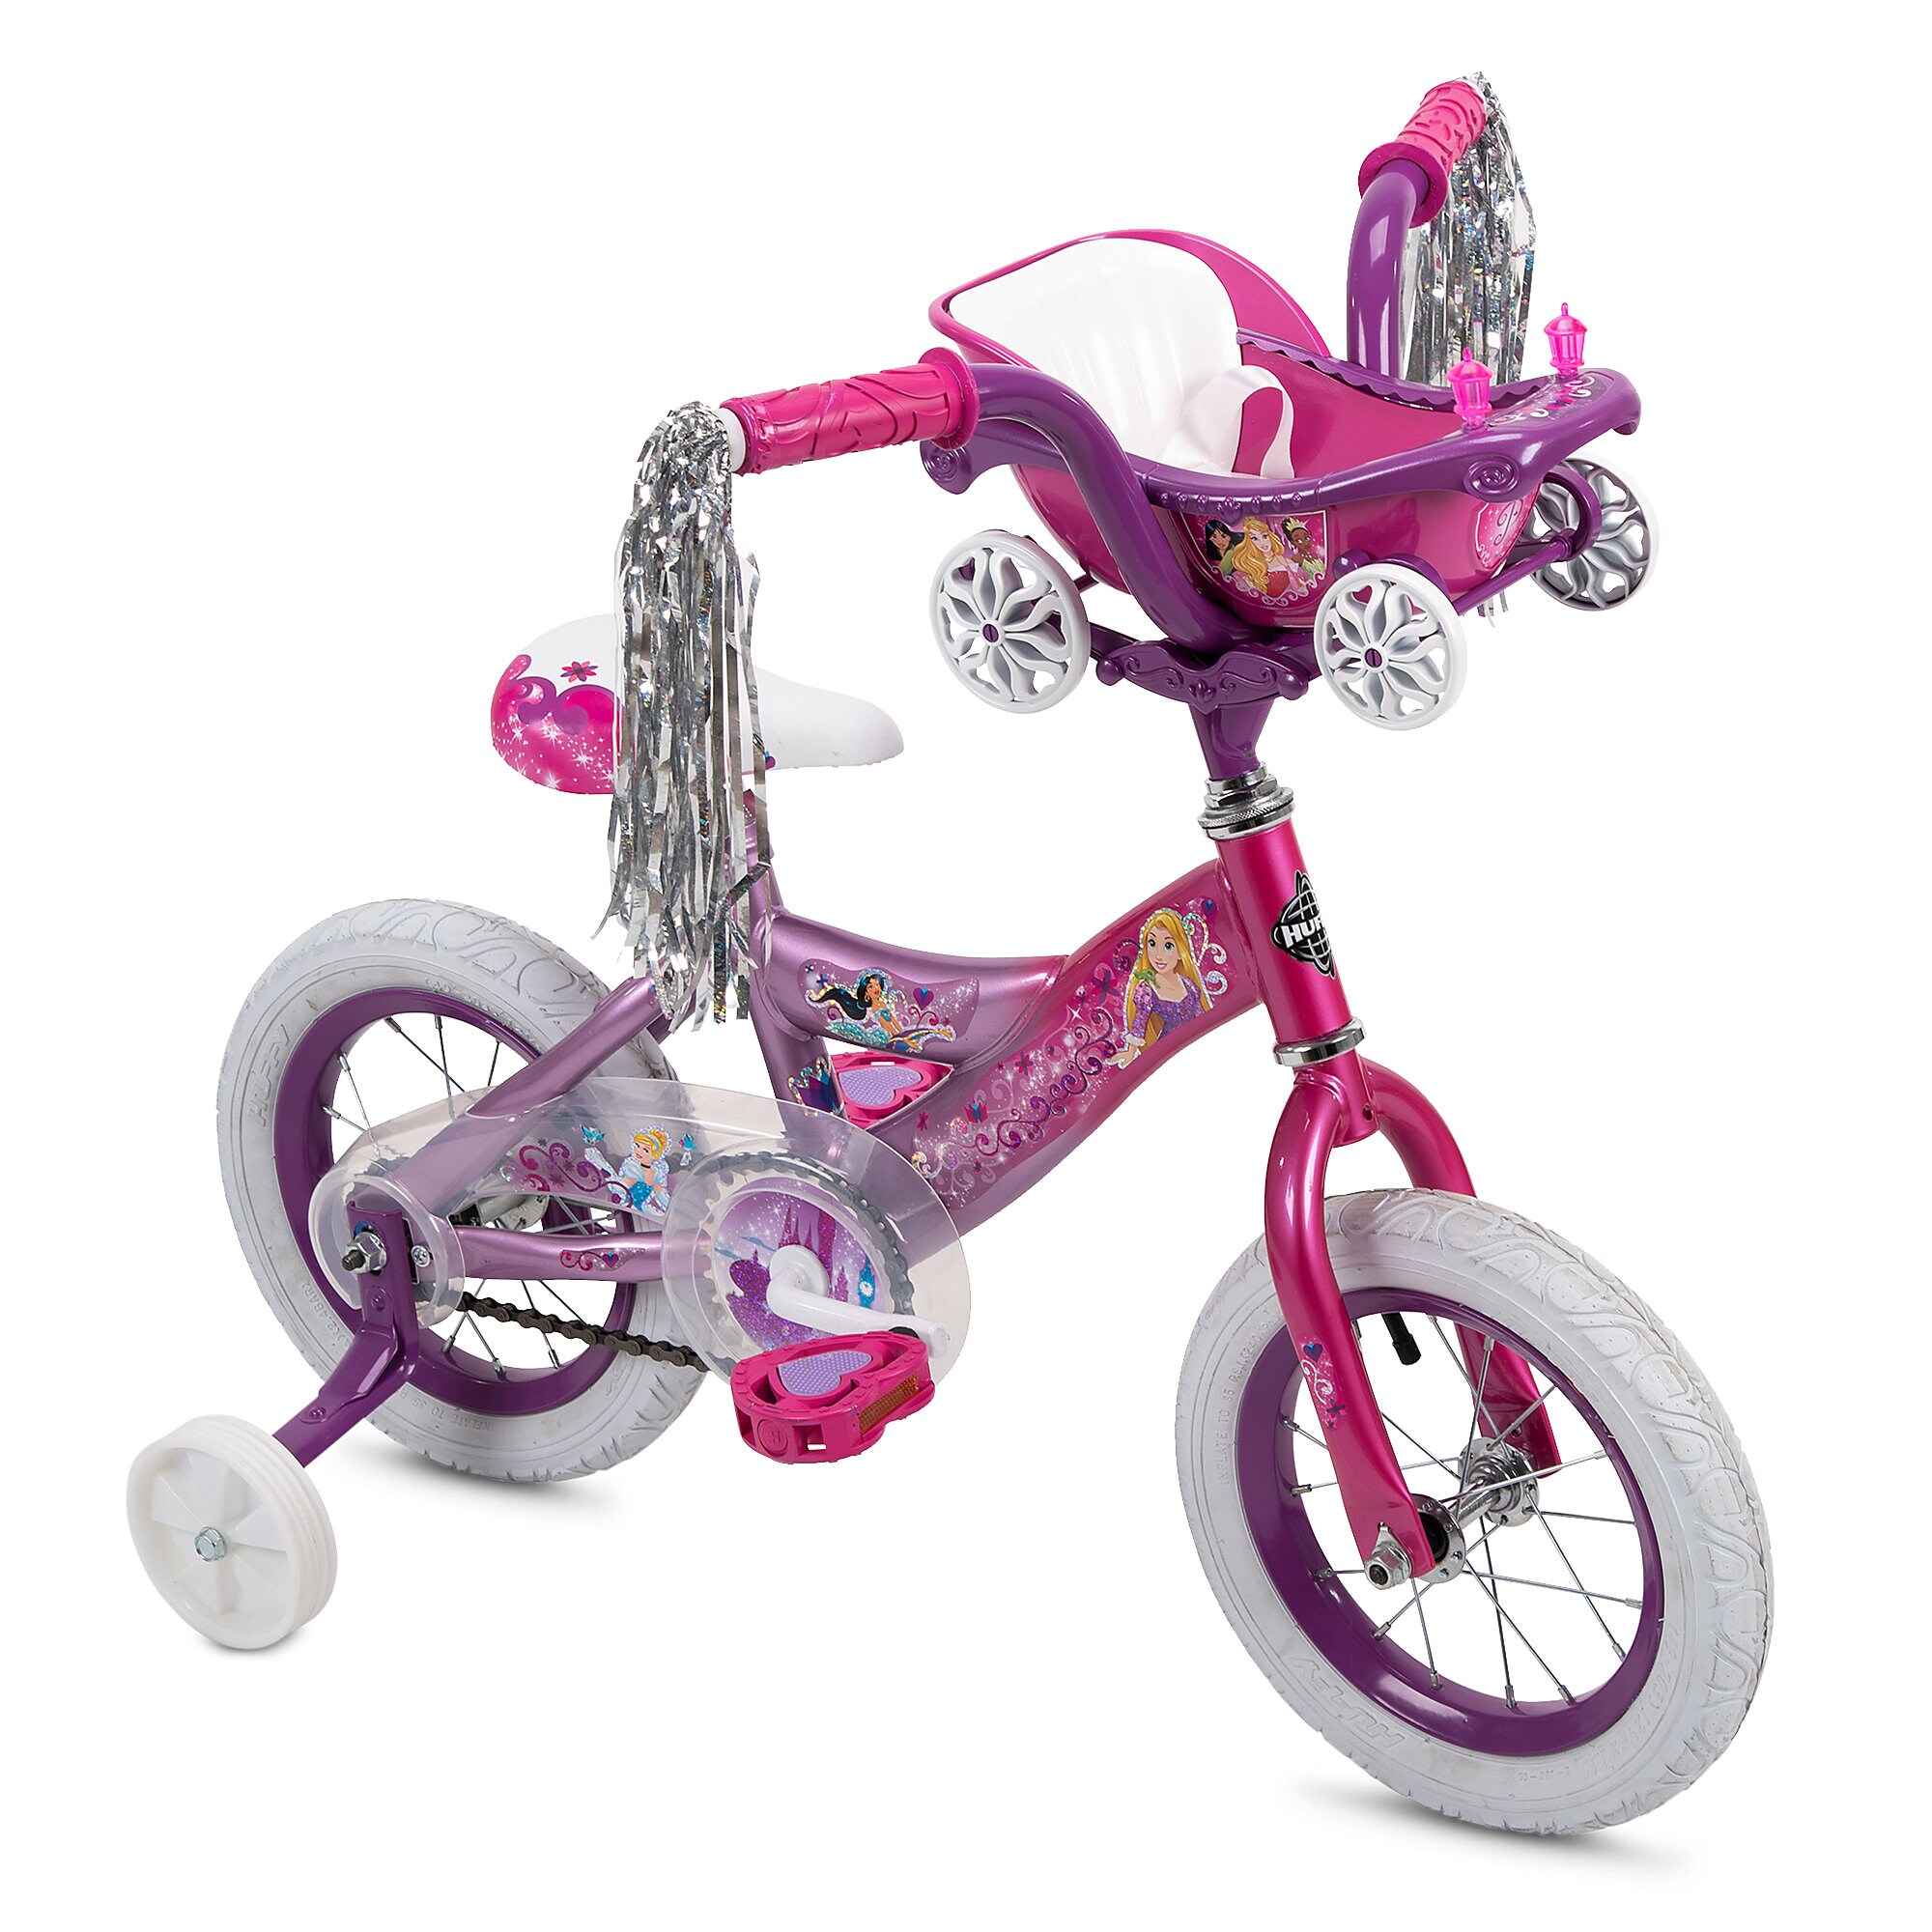 Disney Princess Bike by Huffy - Large